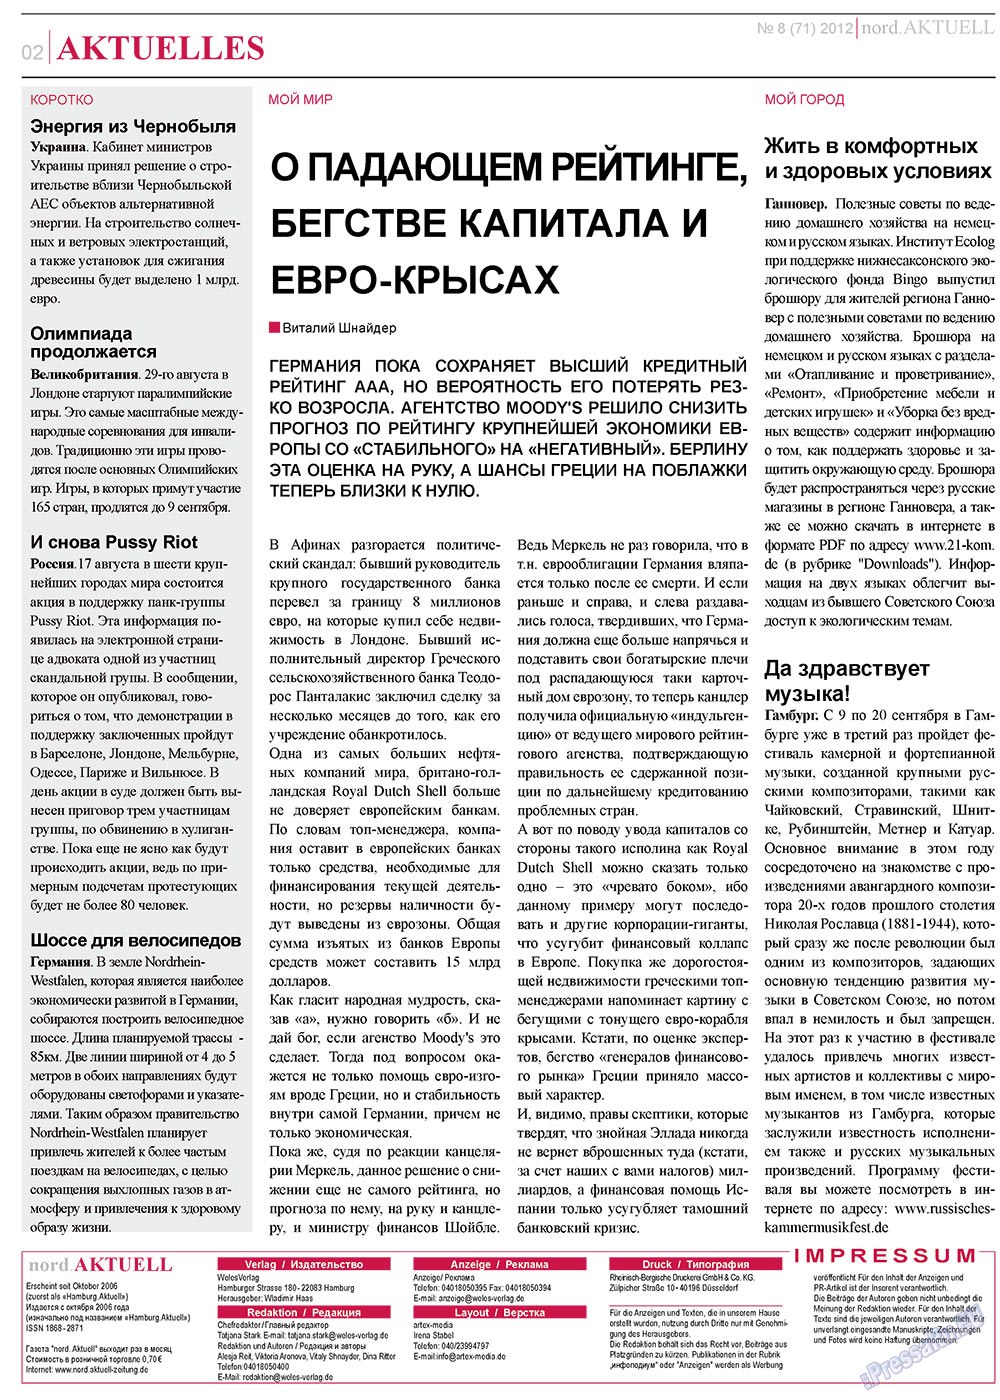 nord.Aktuell, газета. 2012 №8 стр.2